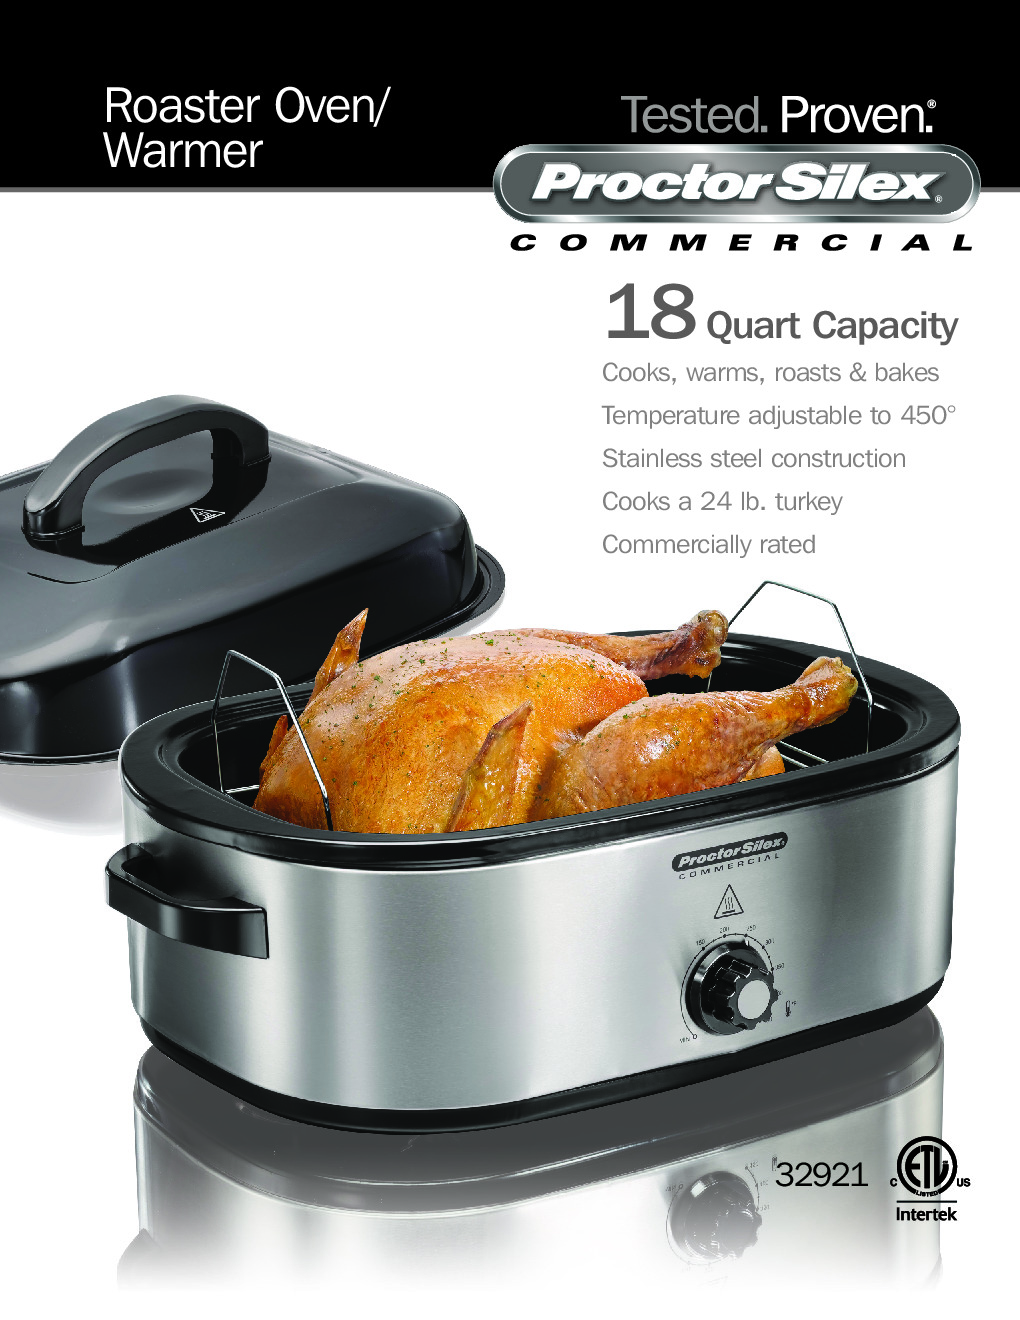 Hamilton Beach 32921 Proctor-Silex® Roaster Oven/Warmer - 18 Quart Capacity